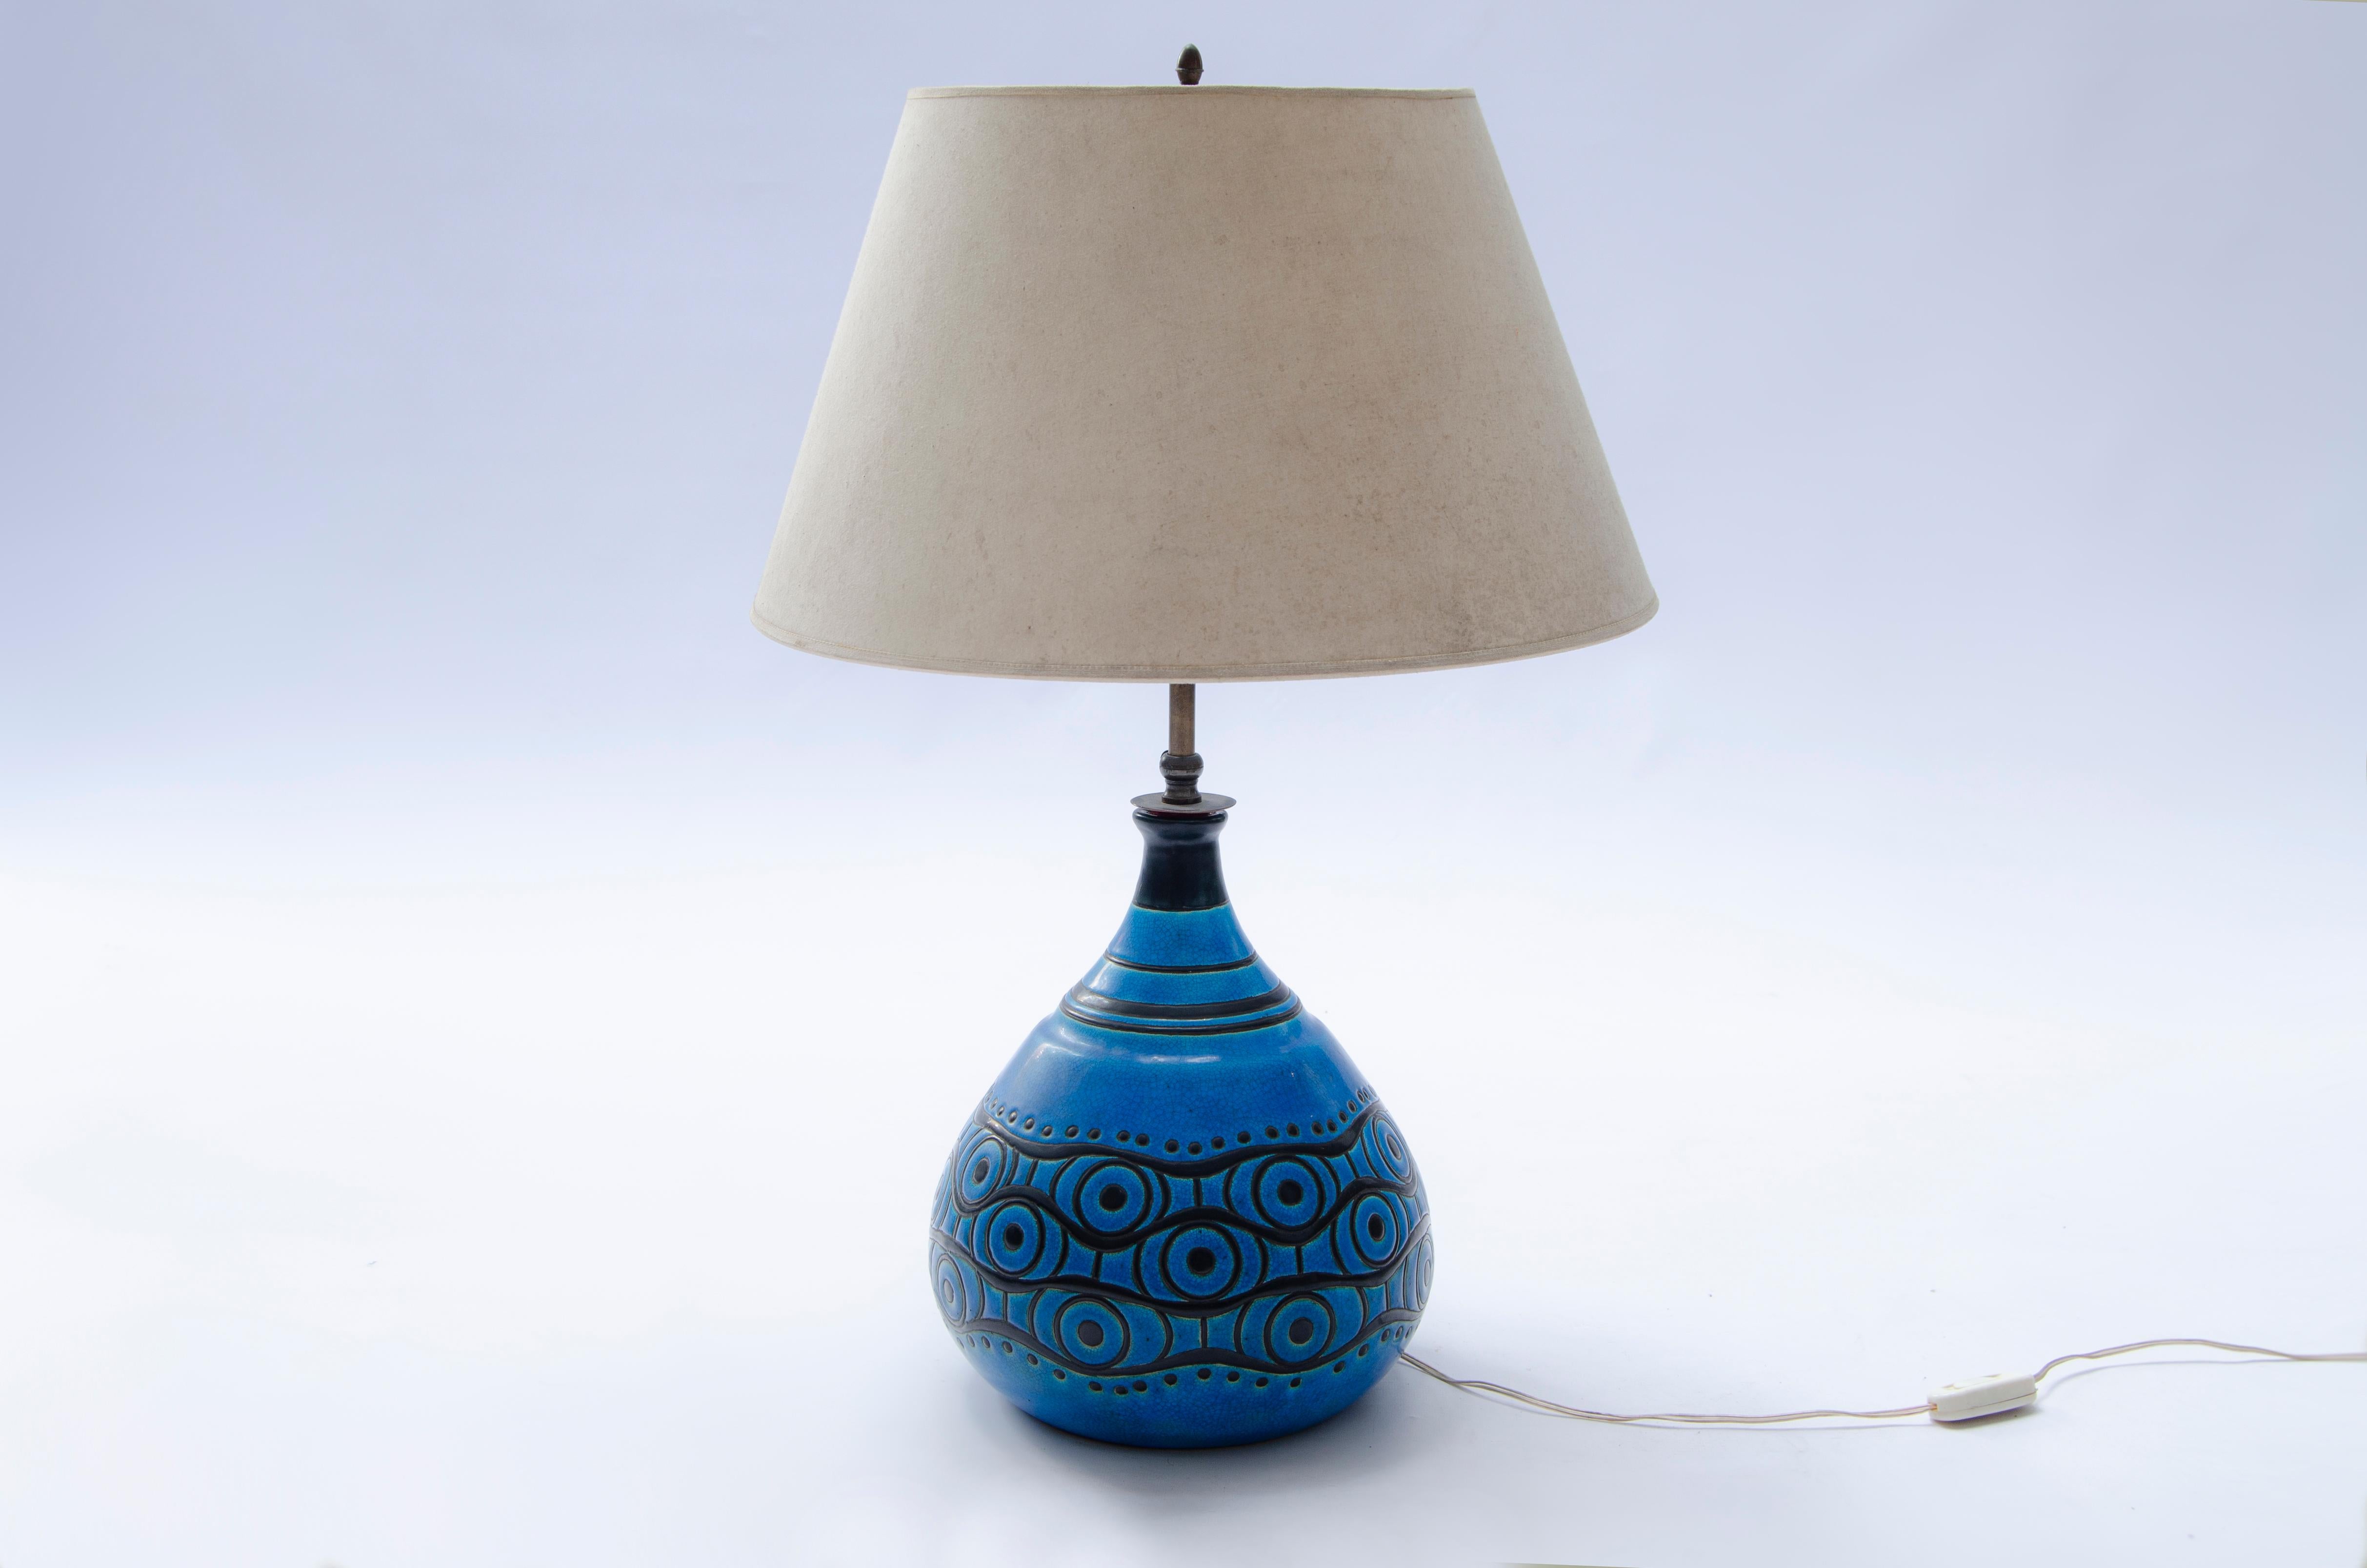 Original vase converted into a lamp, 